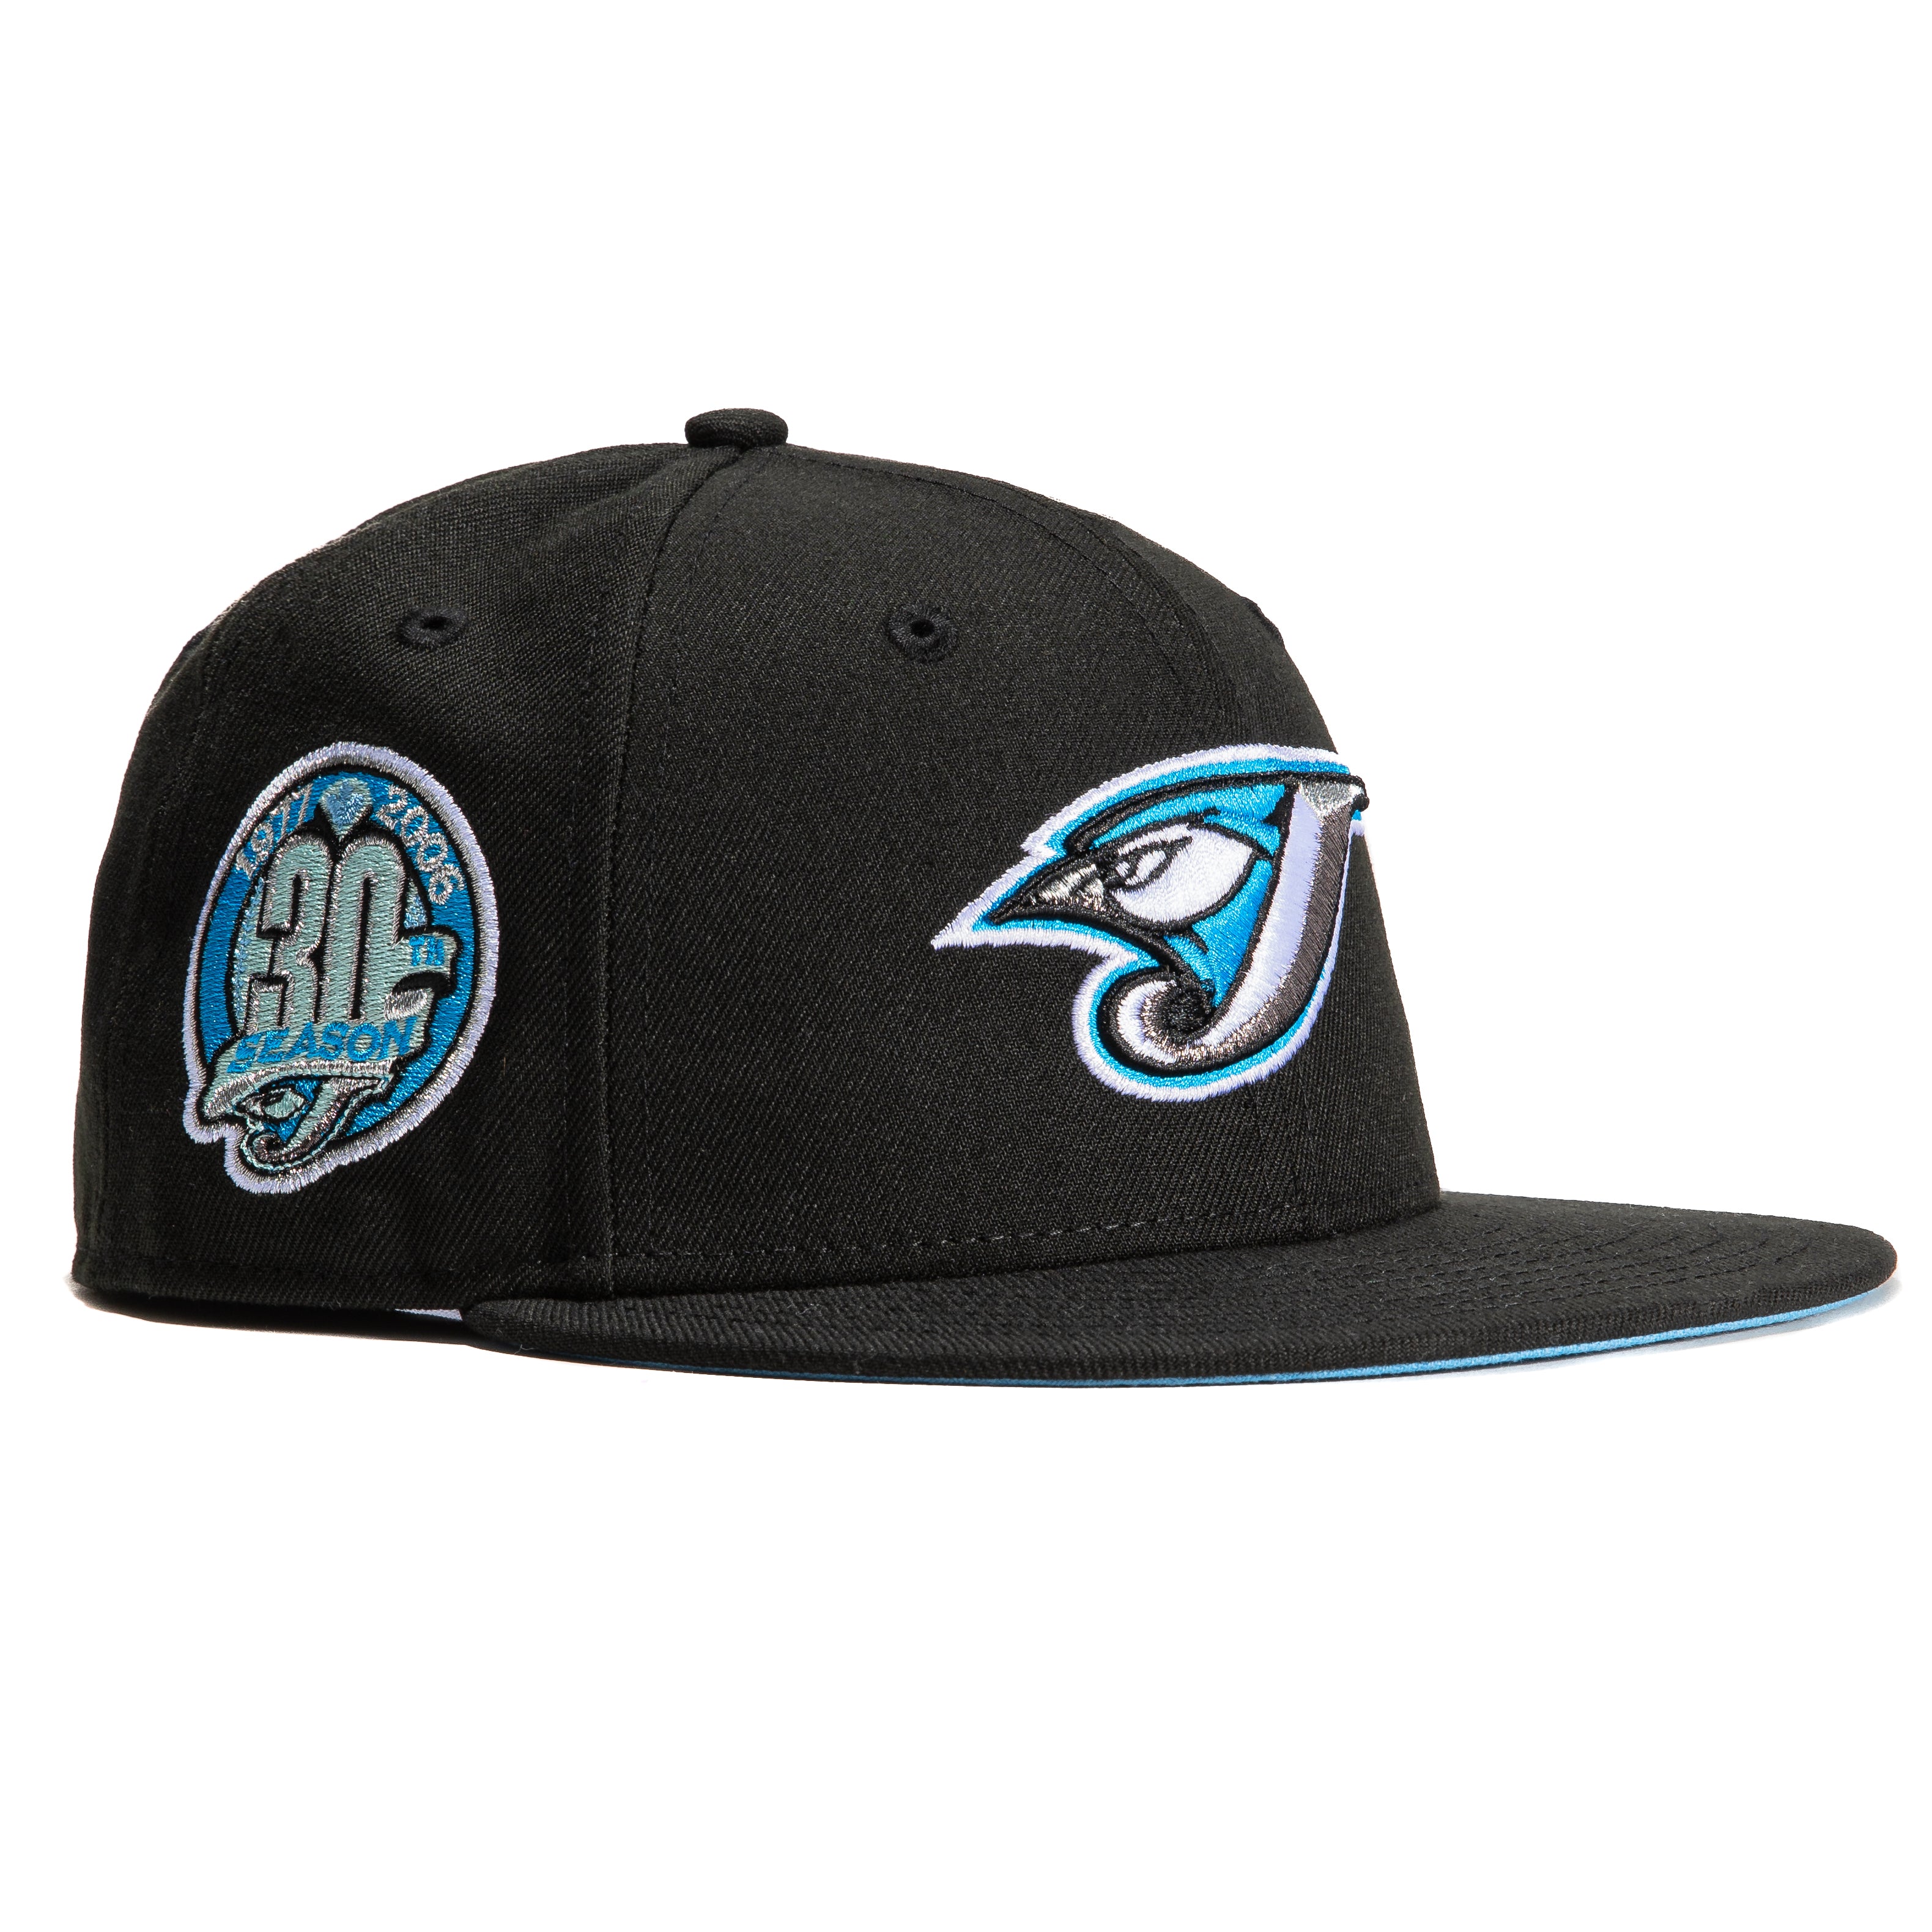 NEW ERA 59FIFTY MLB TORONTO BLUE JAYS 30 SEASONS BLACK / GREY UV FITTED CAP